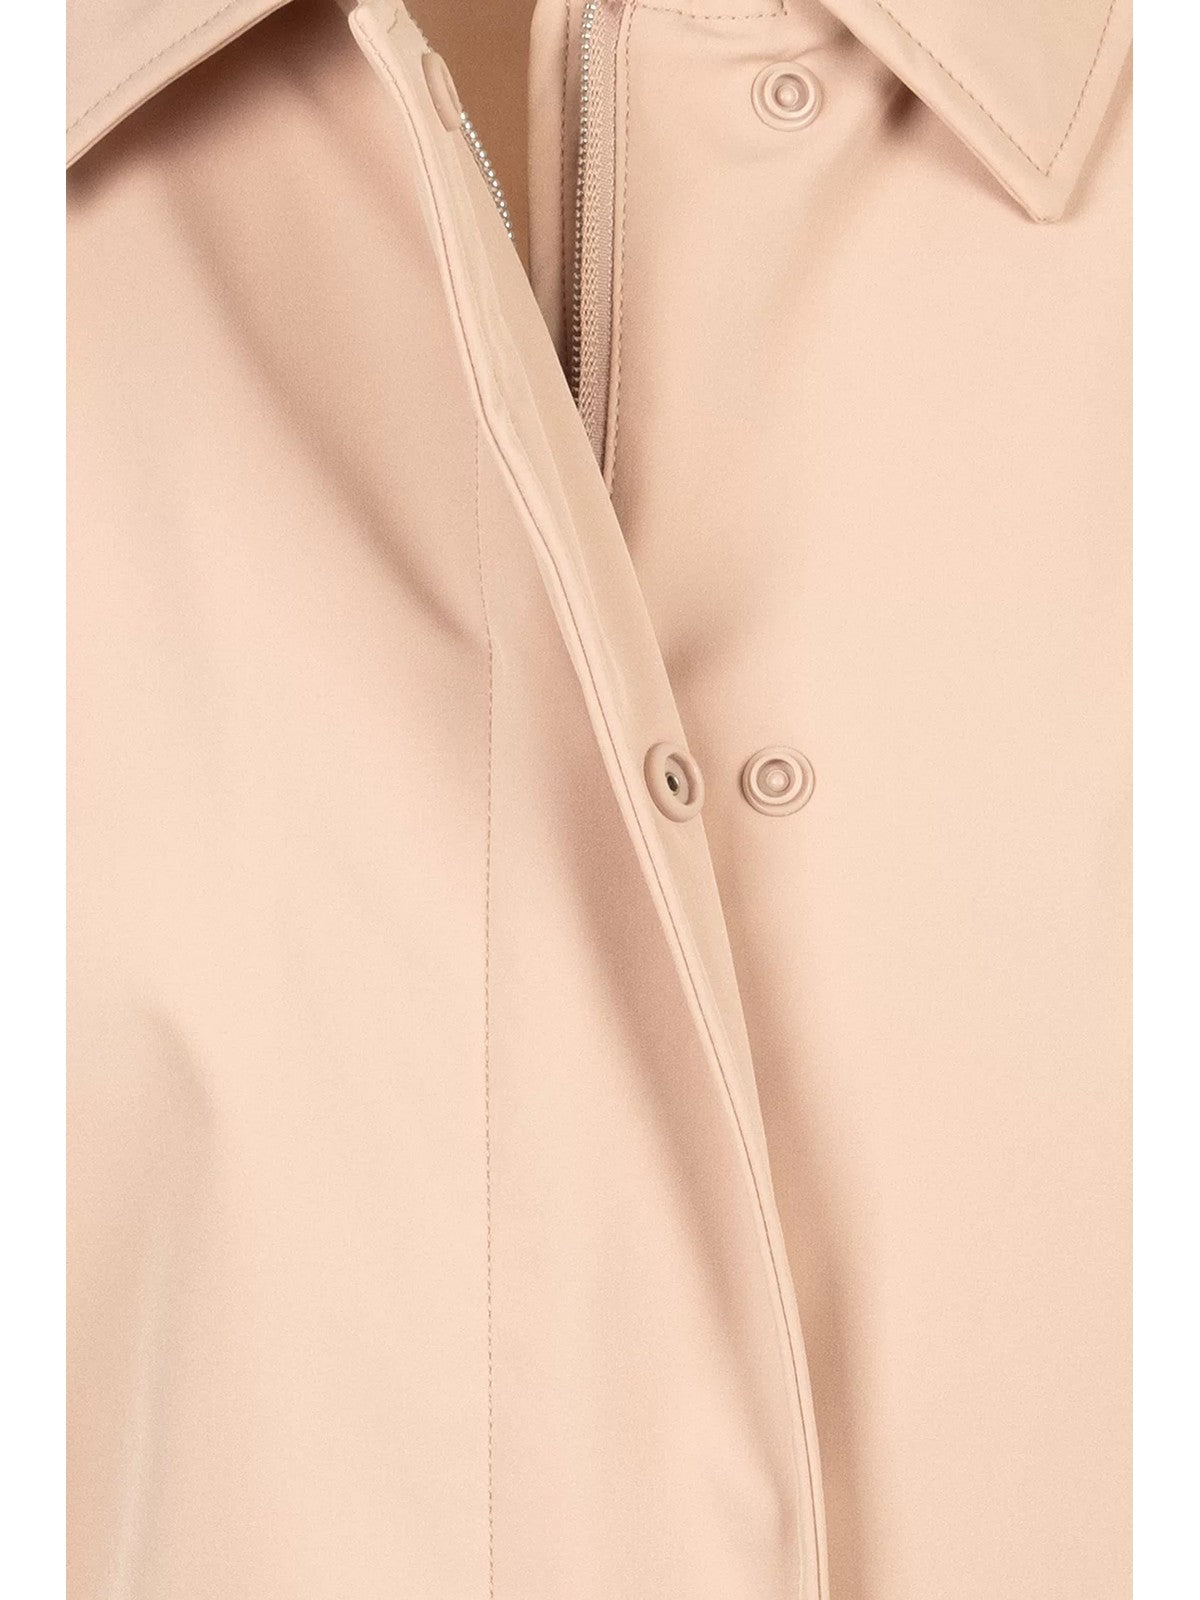 COLMAR Trench-coat pour femmes 1966 6WV 588 Pink